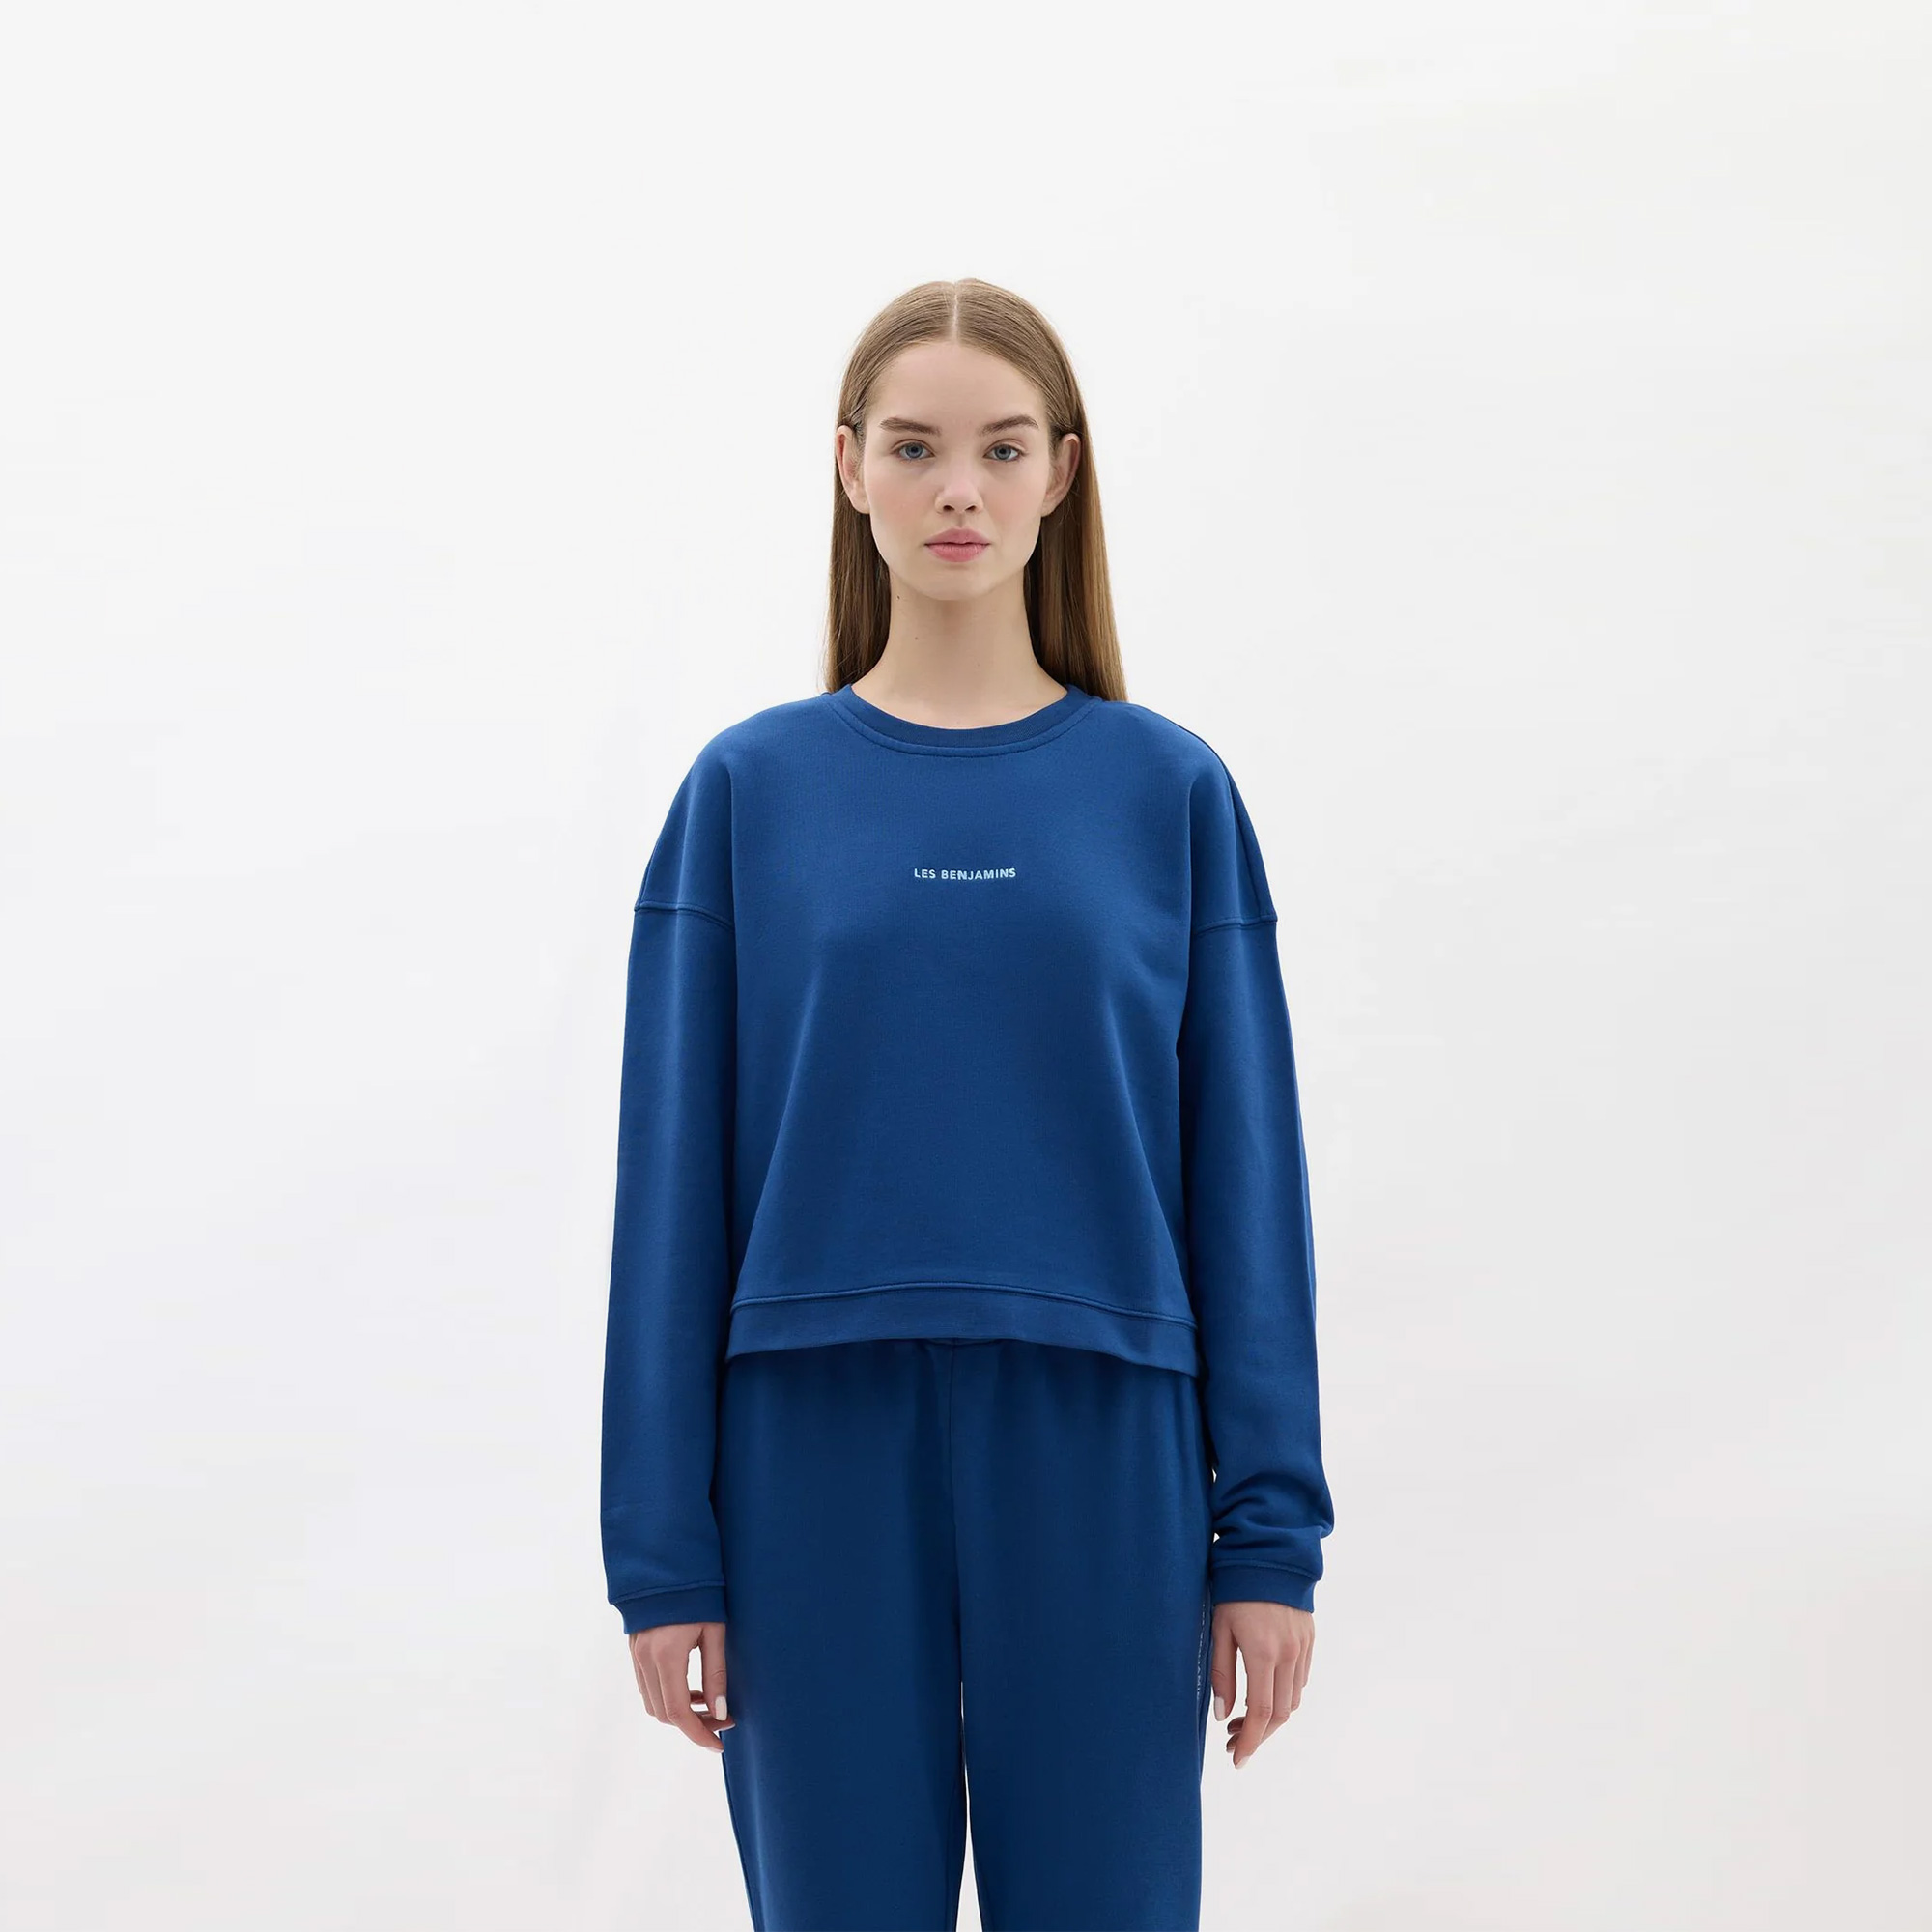 Les Benjamins Core Kadın Lacivert Sweatshirt